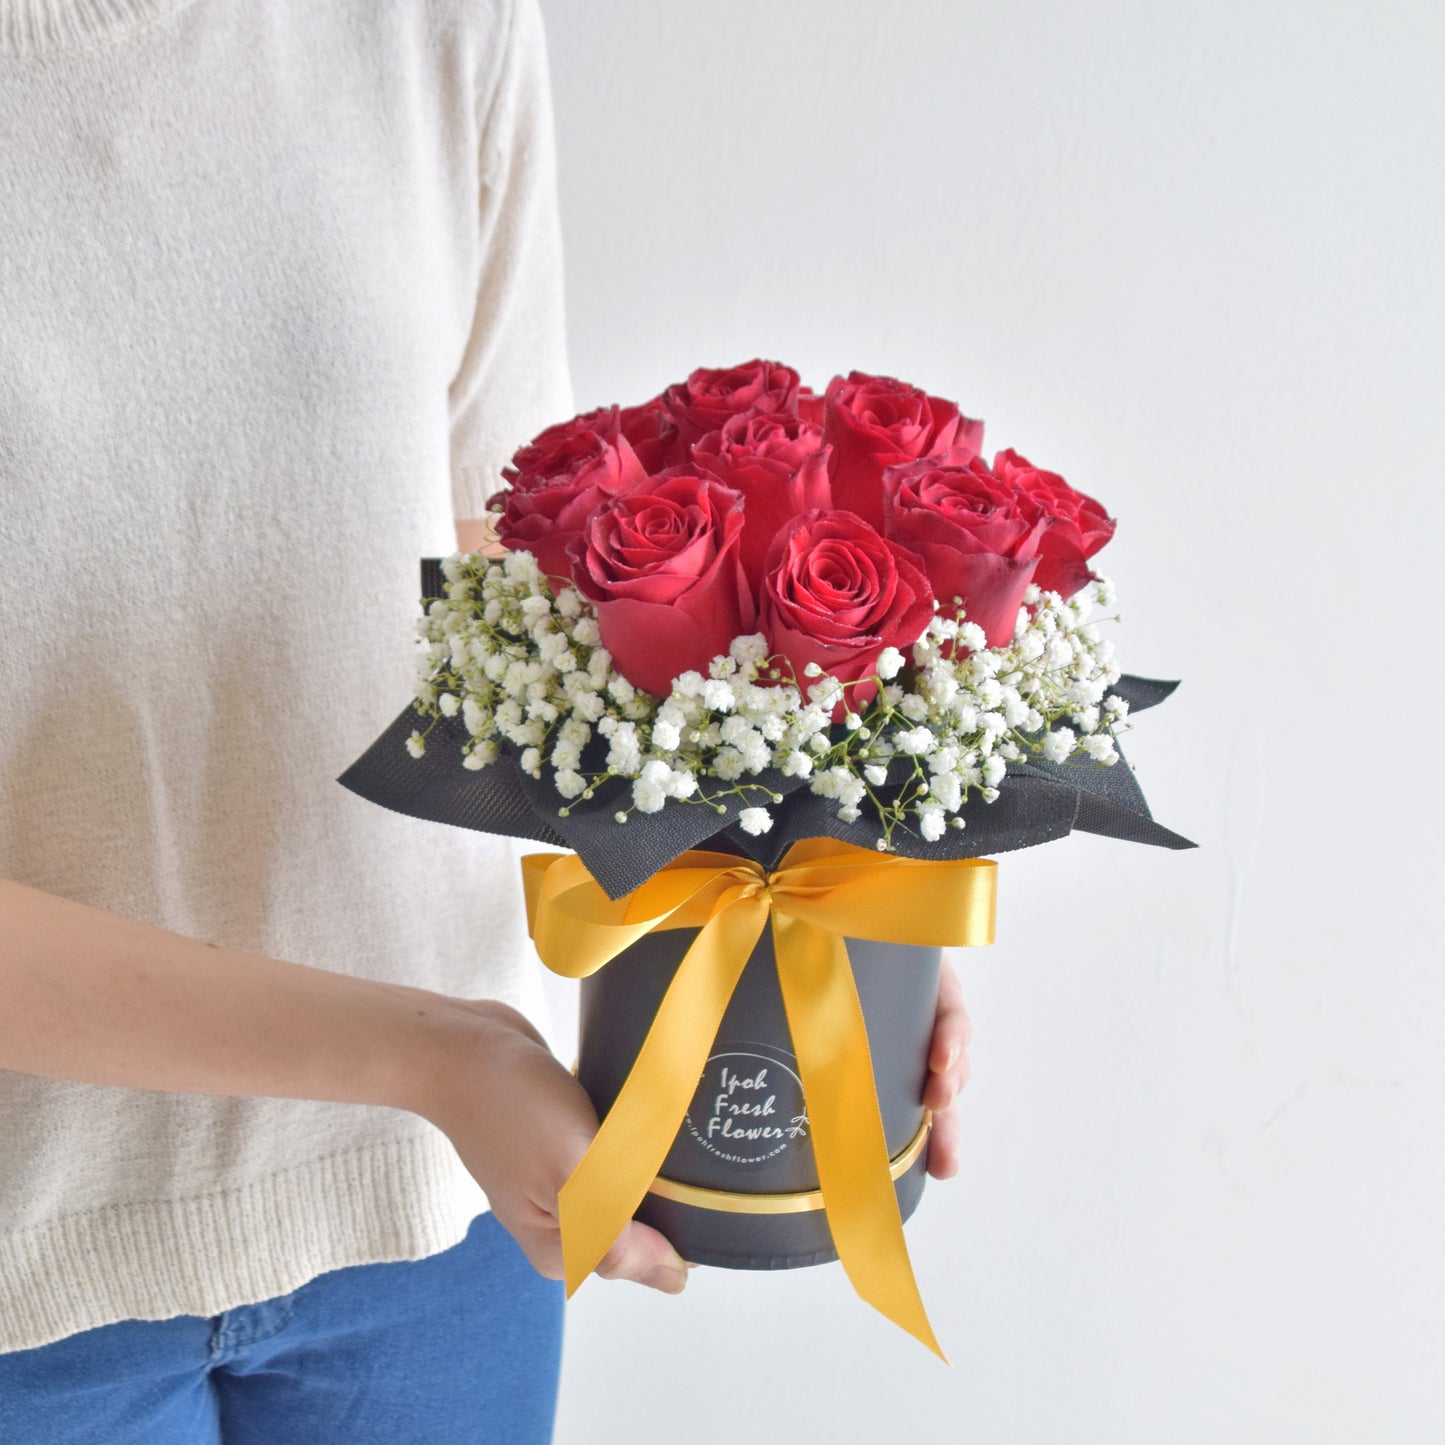 Classic Romance flower box| Valentine Fresh Flower Delivery